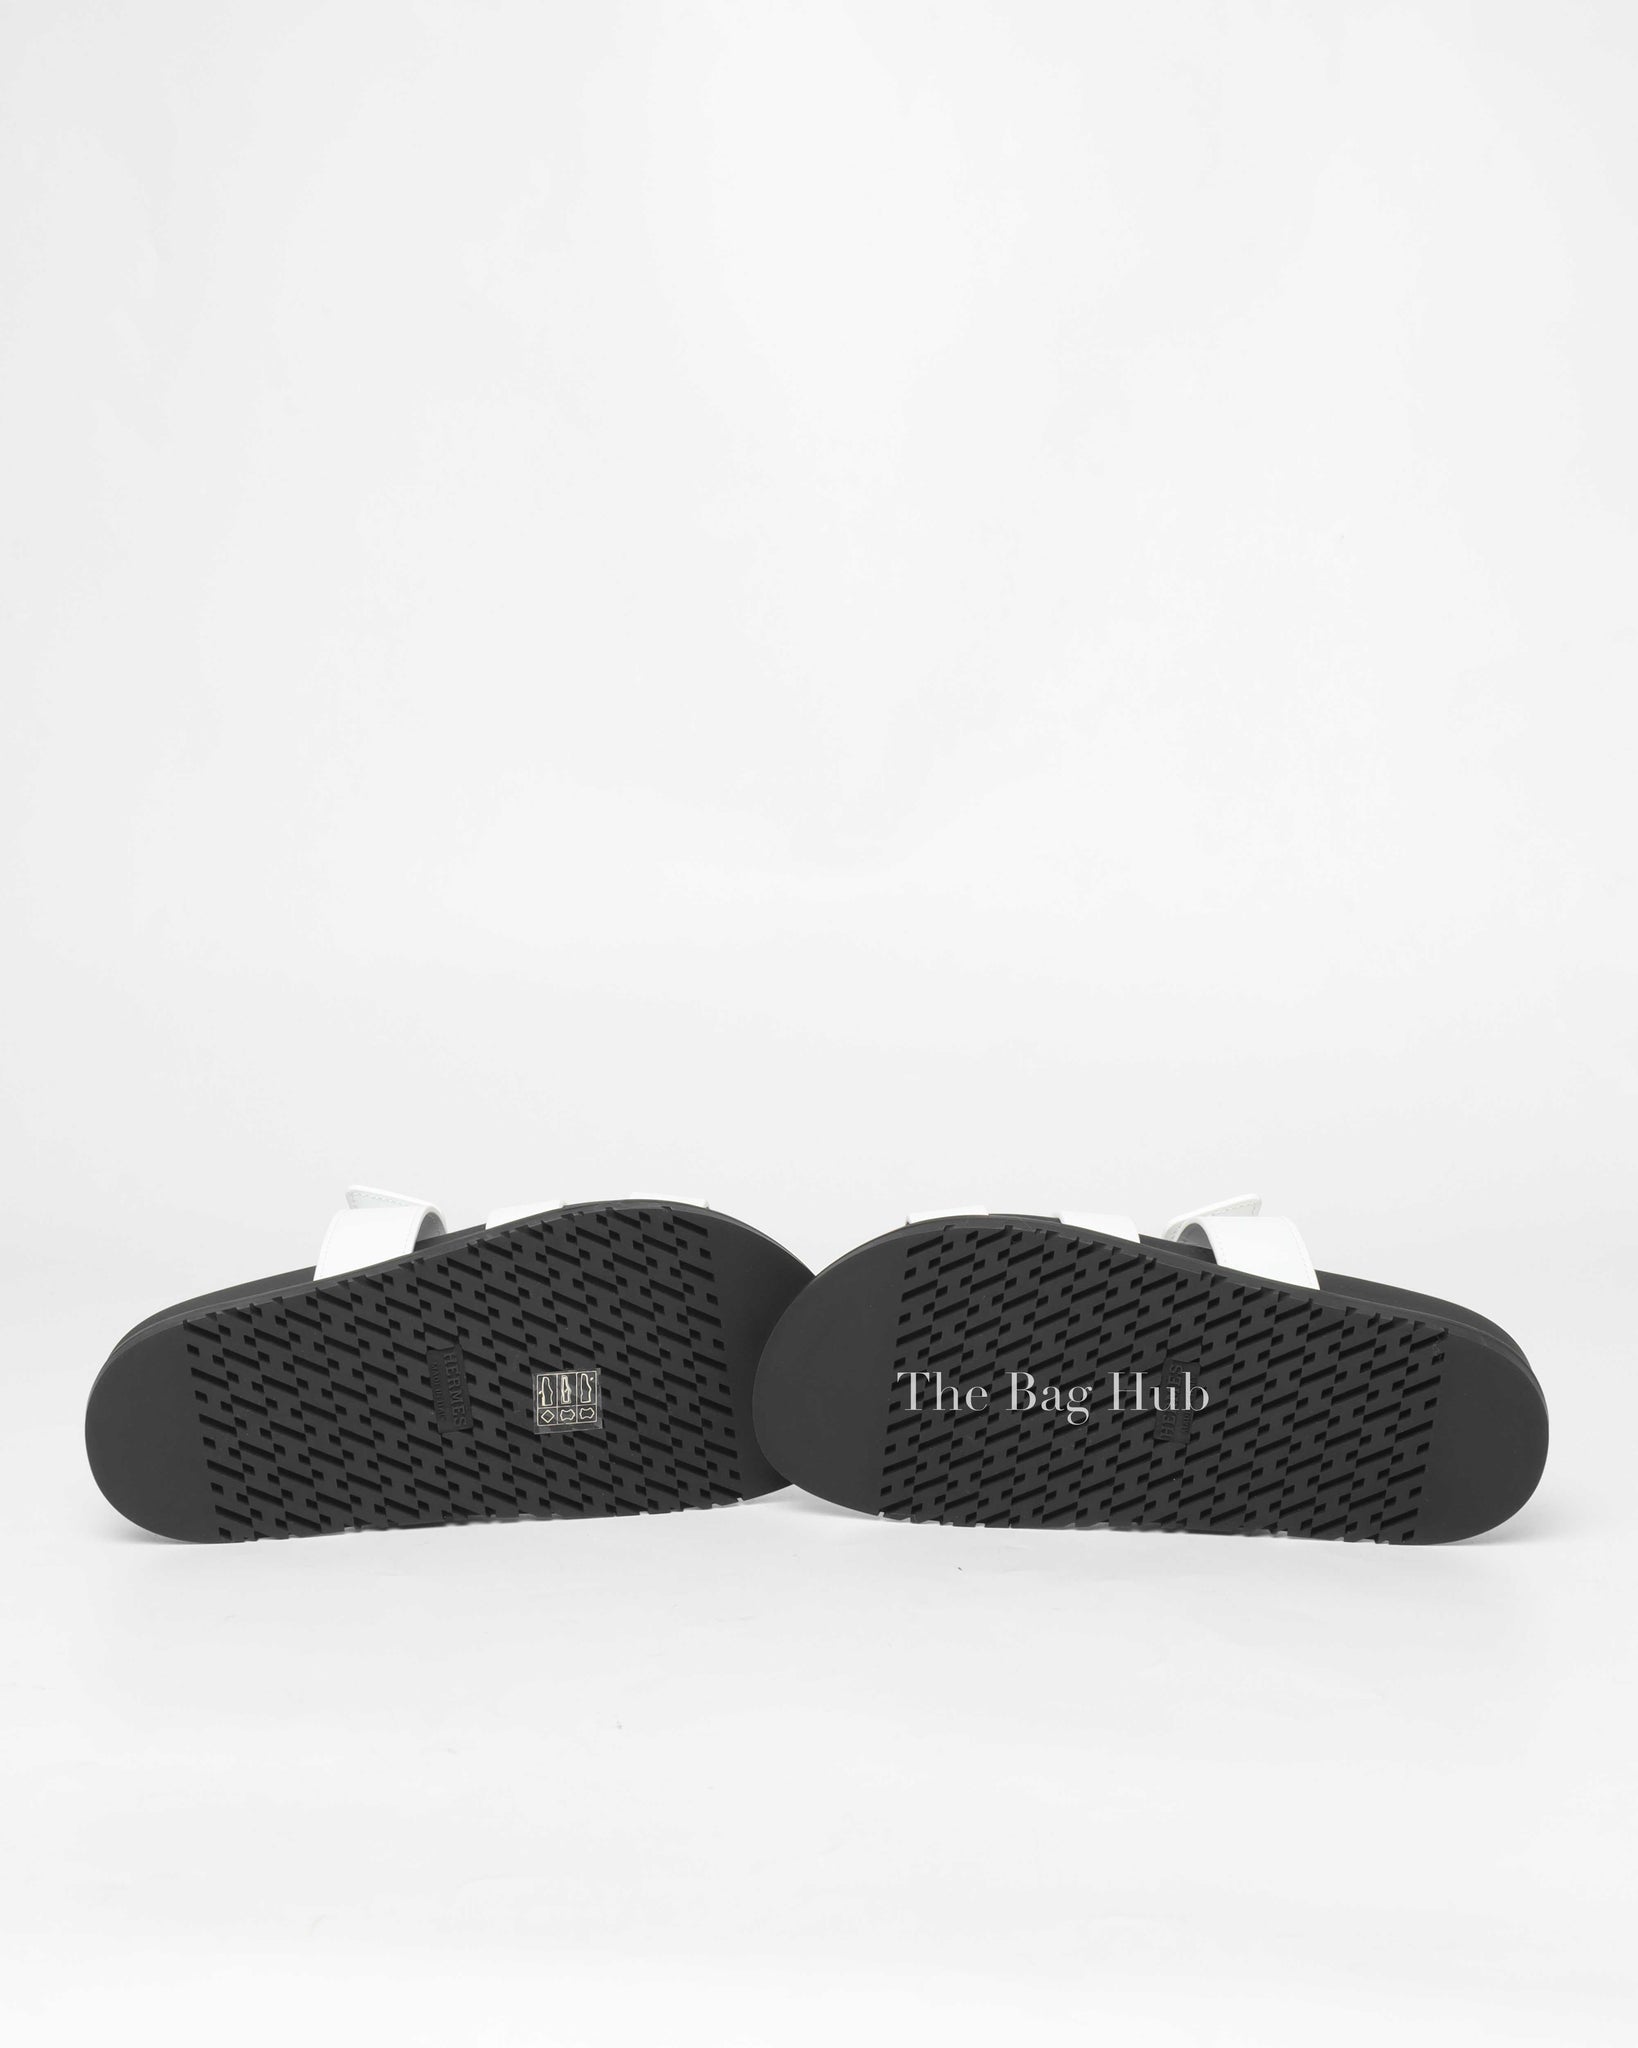 Hermes White/Black Chypre Sandals Size 36.5